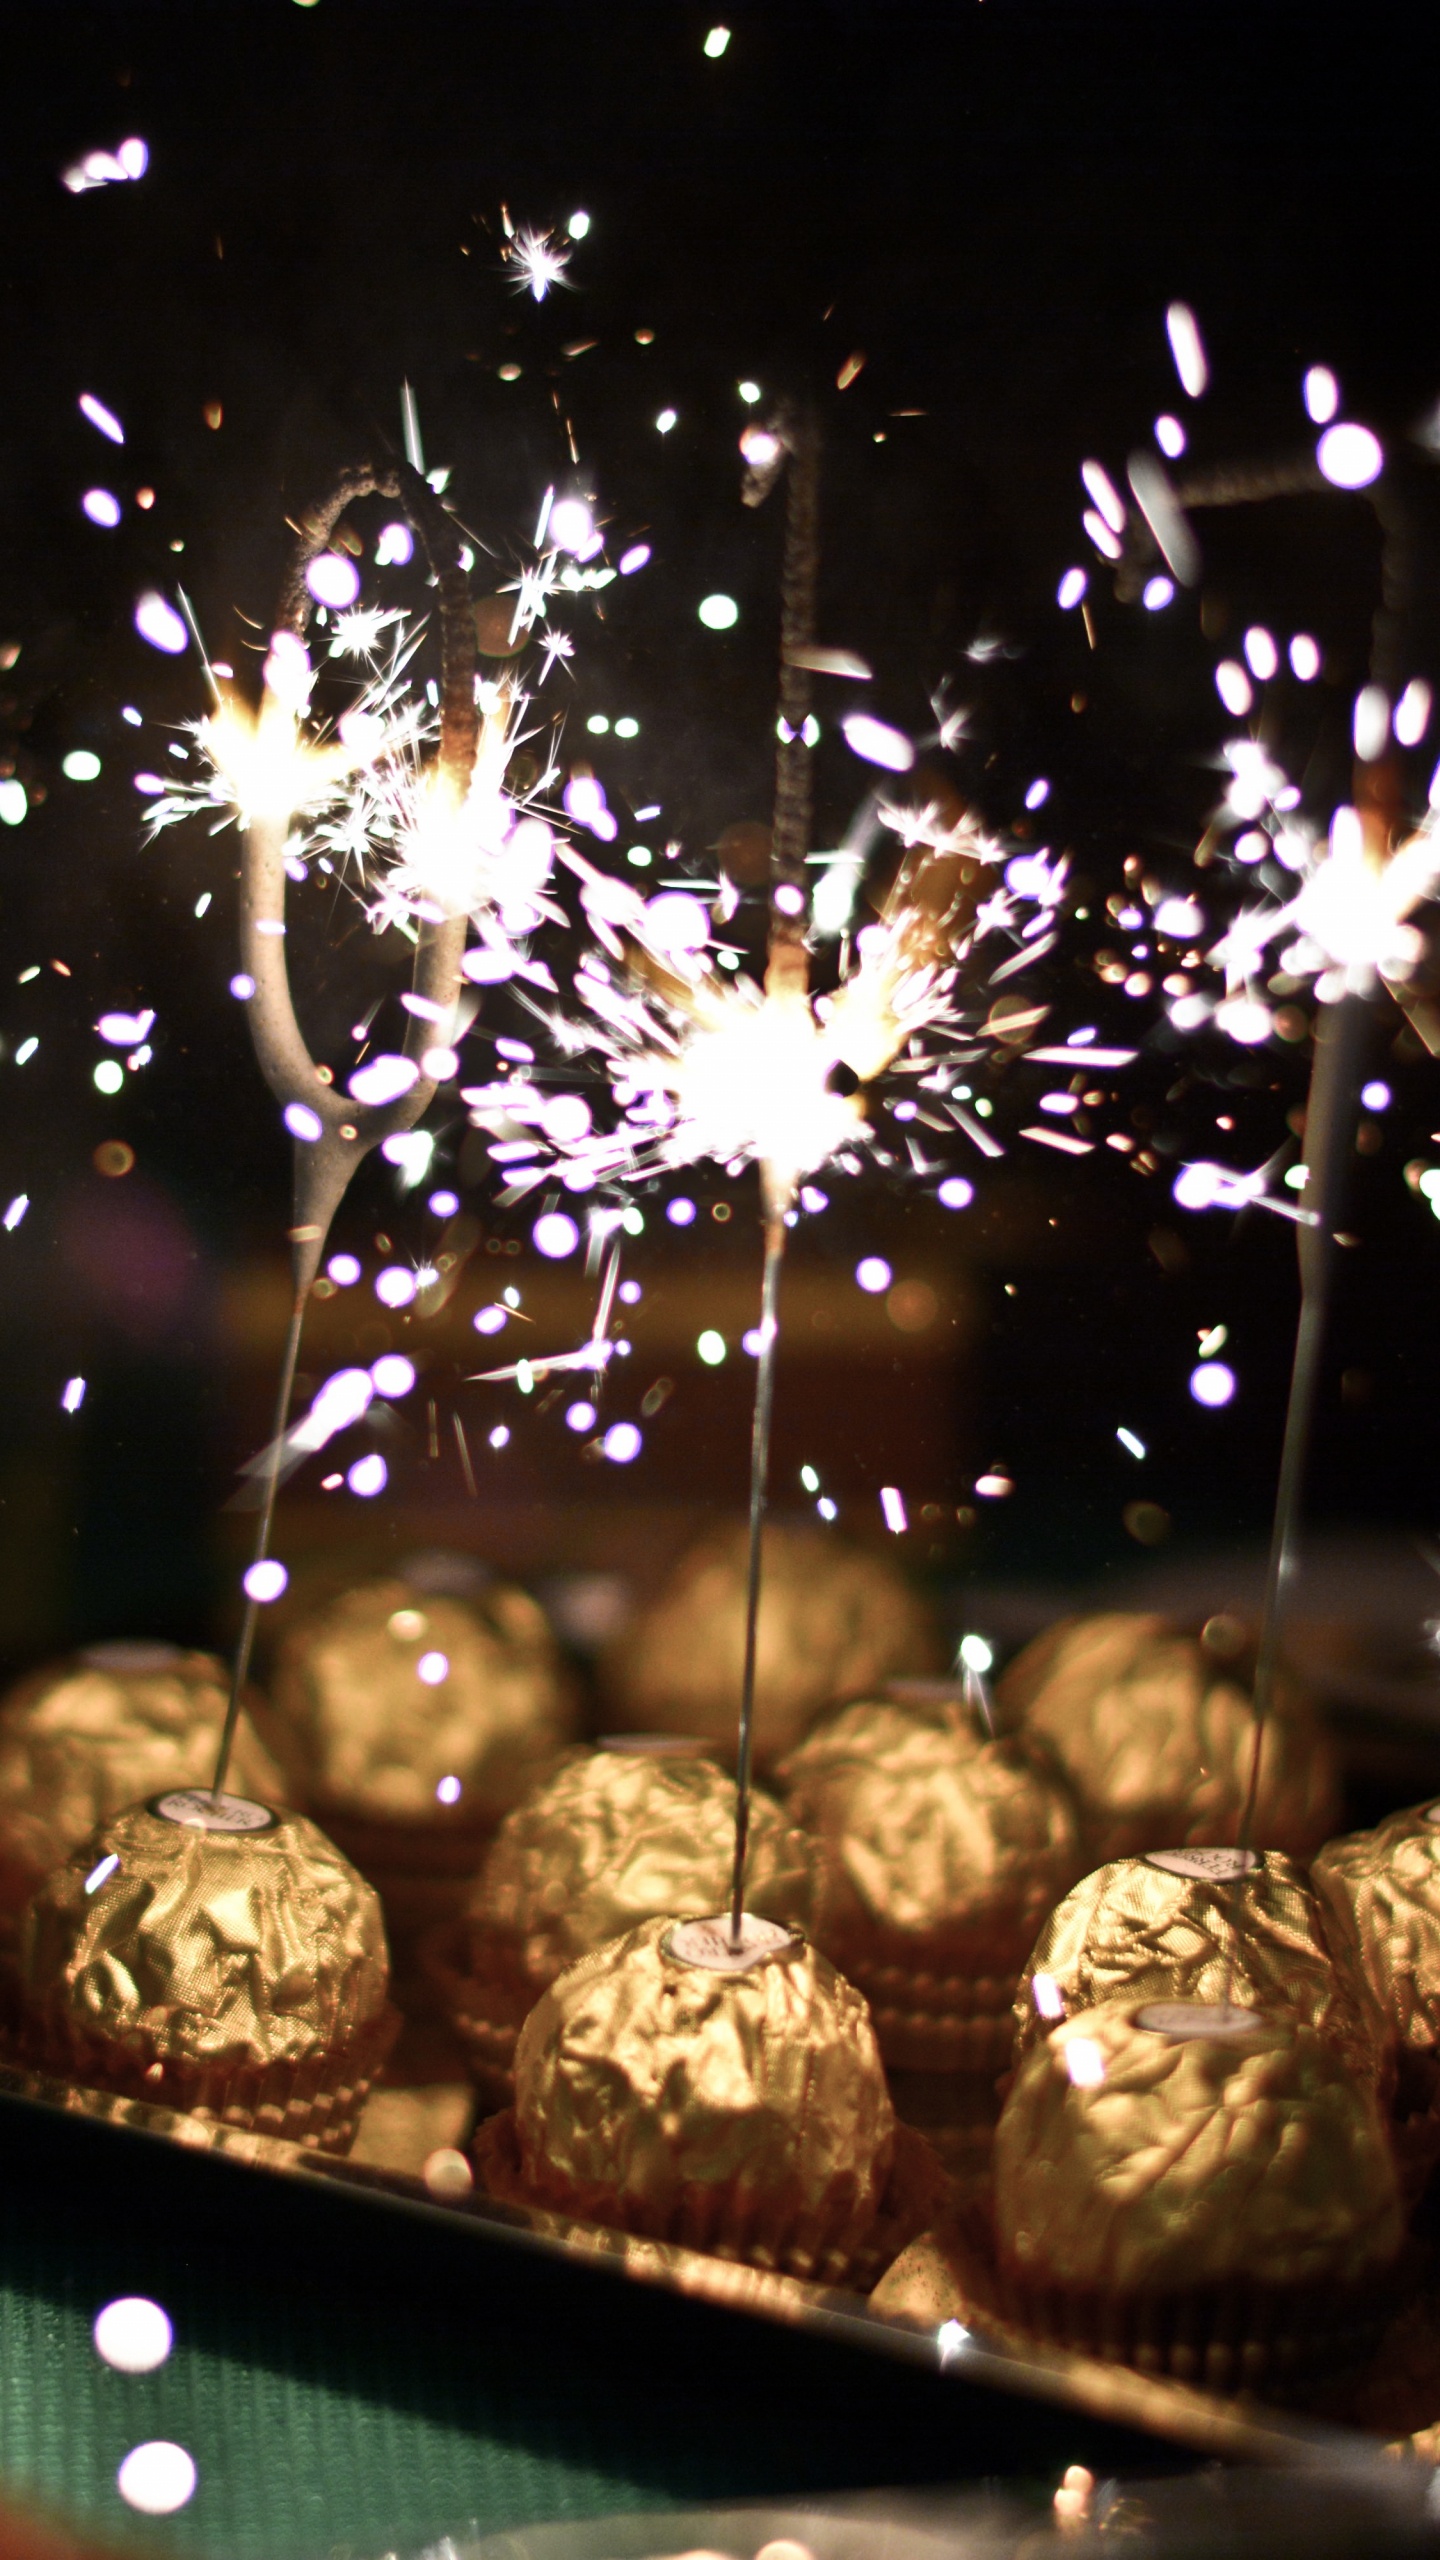 Chocolate Balls, Candy, Chocolate, Fireworks, Sparkler. Wallpaper in 1440x2560 Resolution